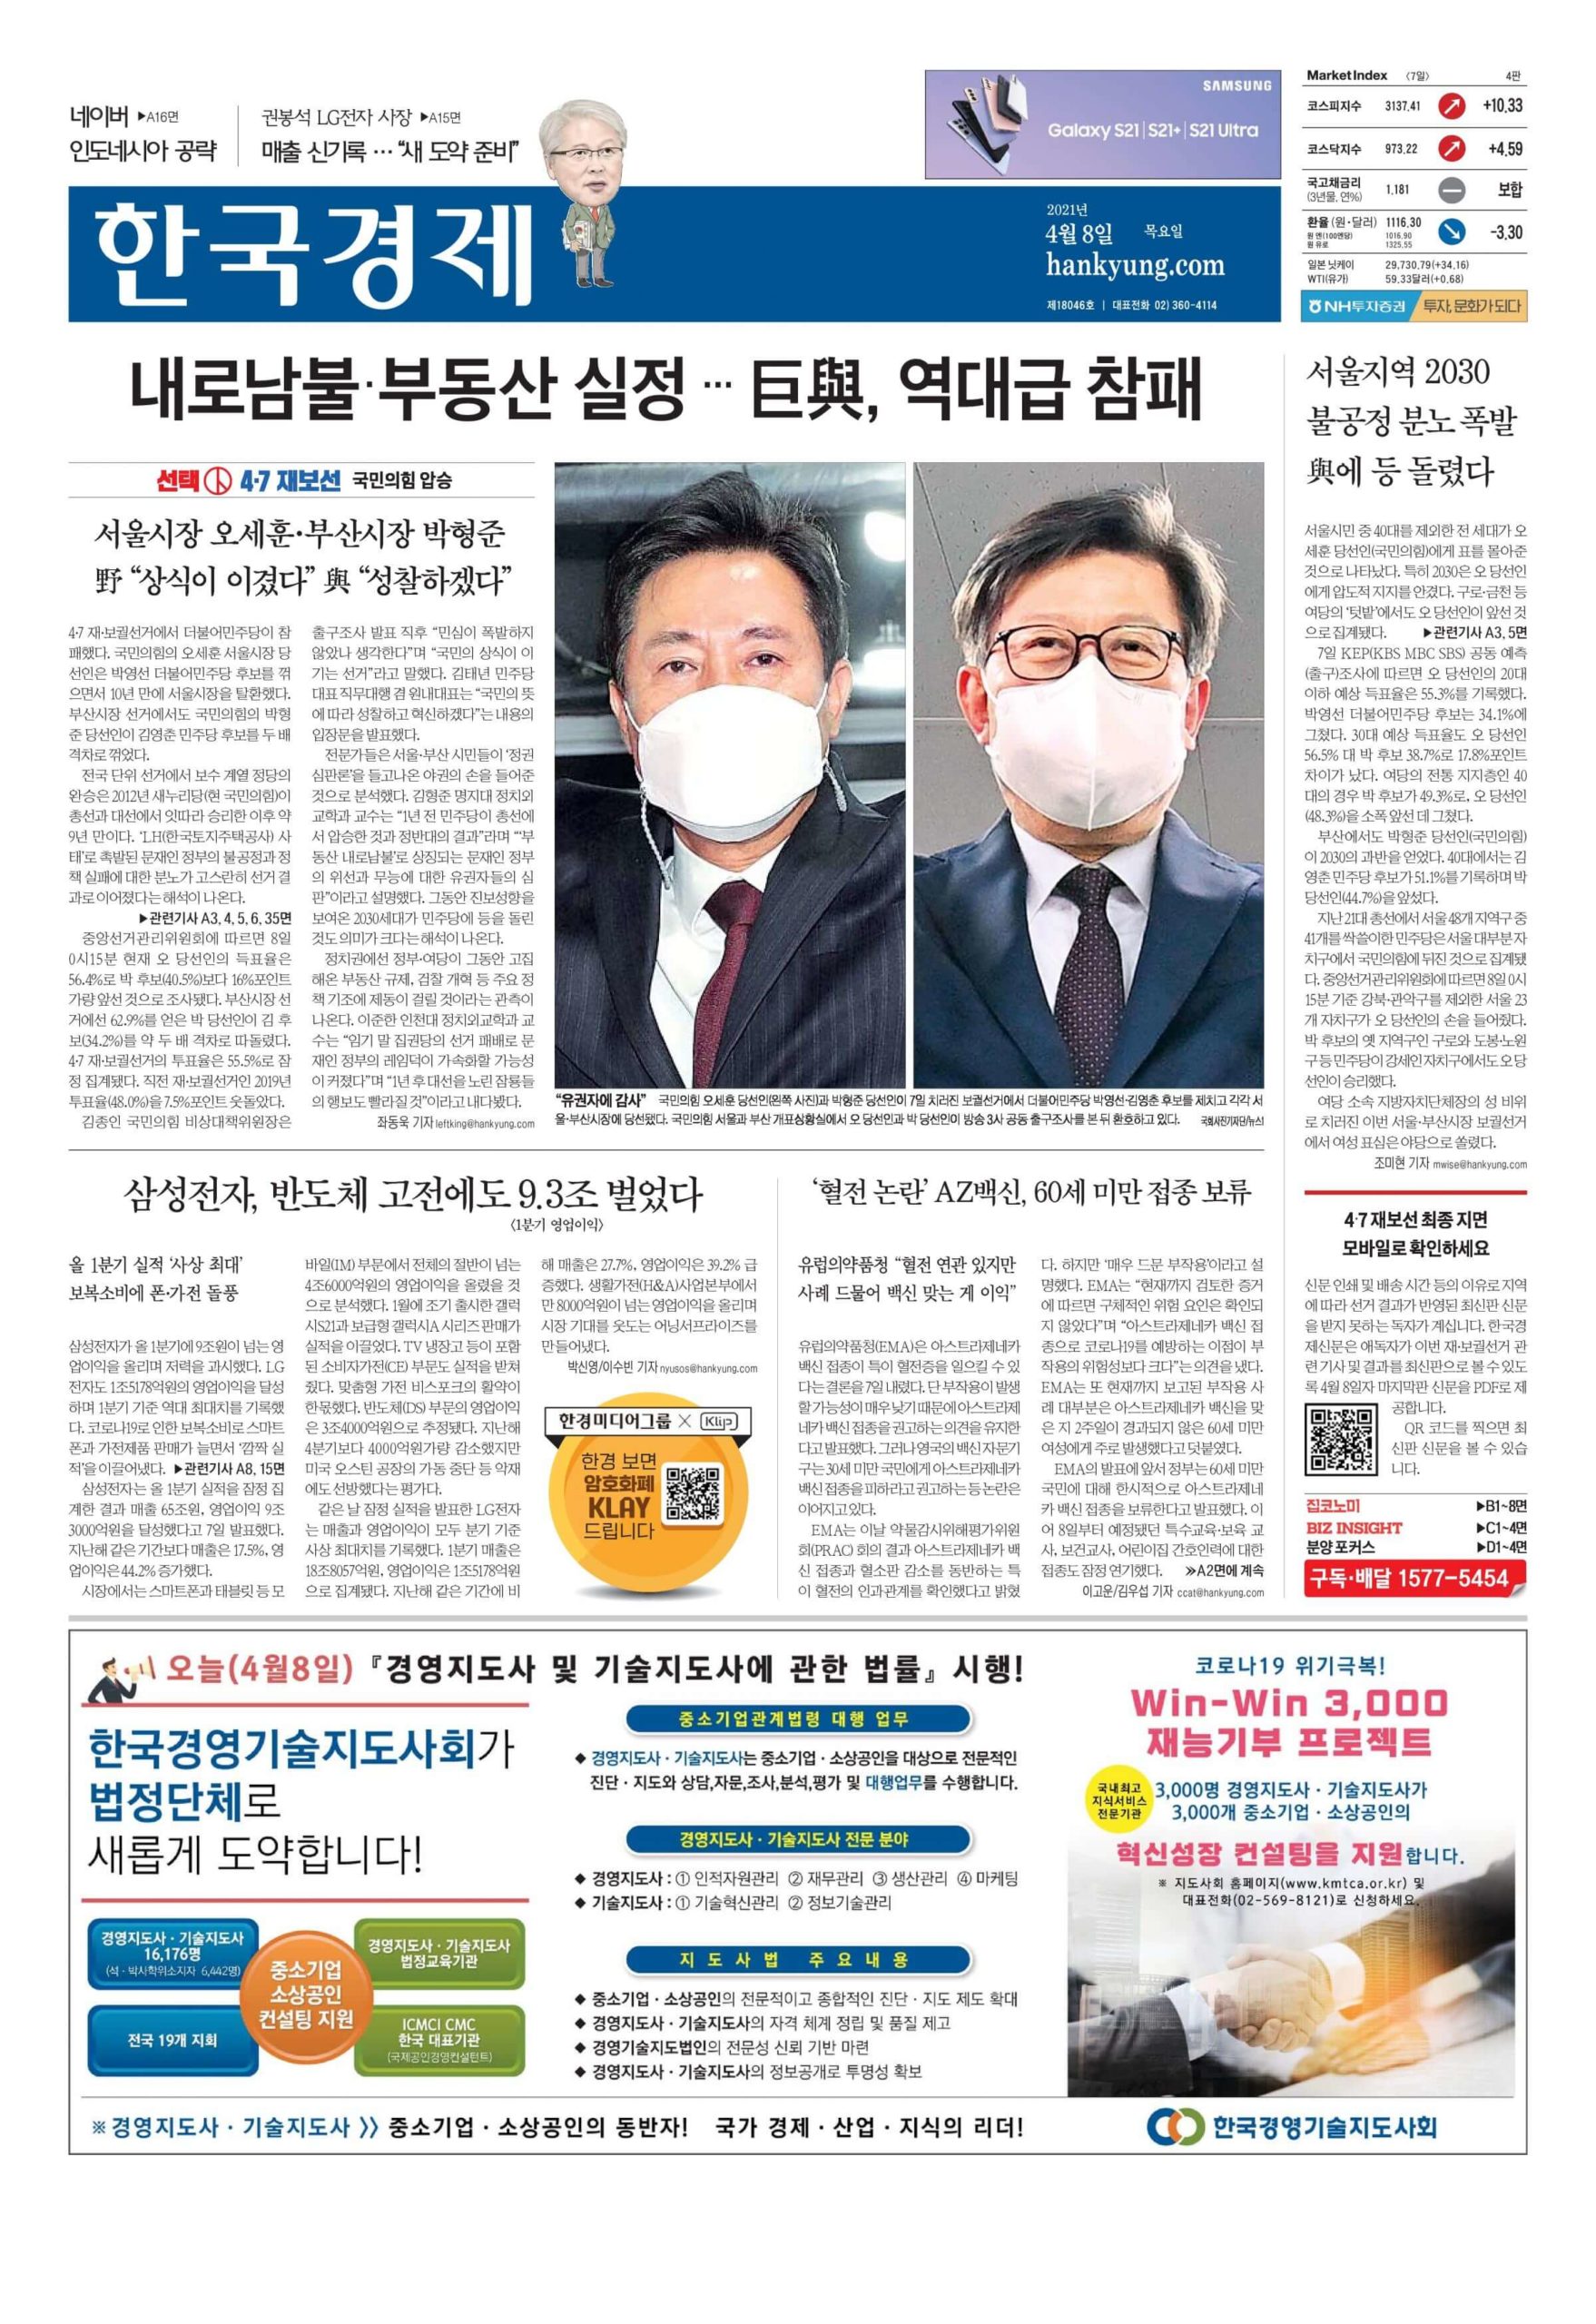 South Korea Newspapers 44 Hankyung scaled